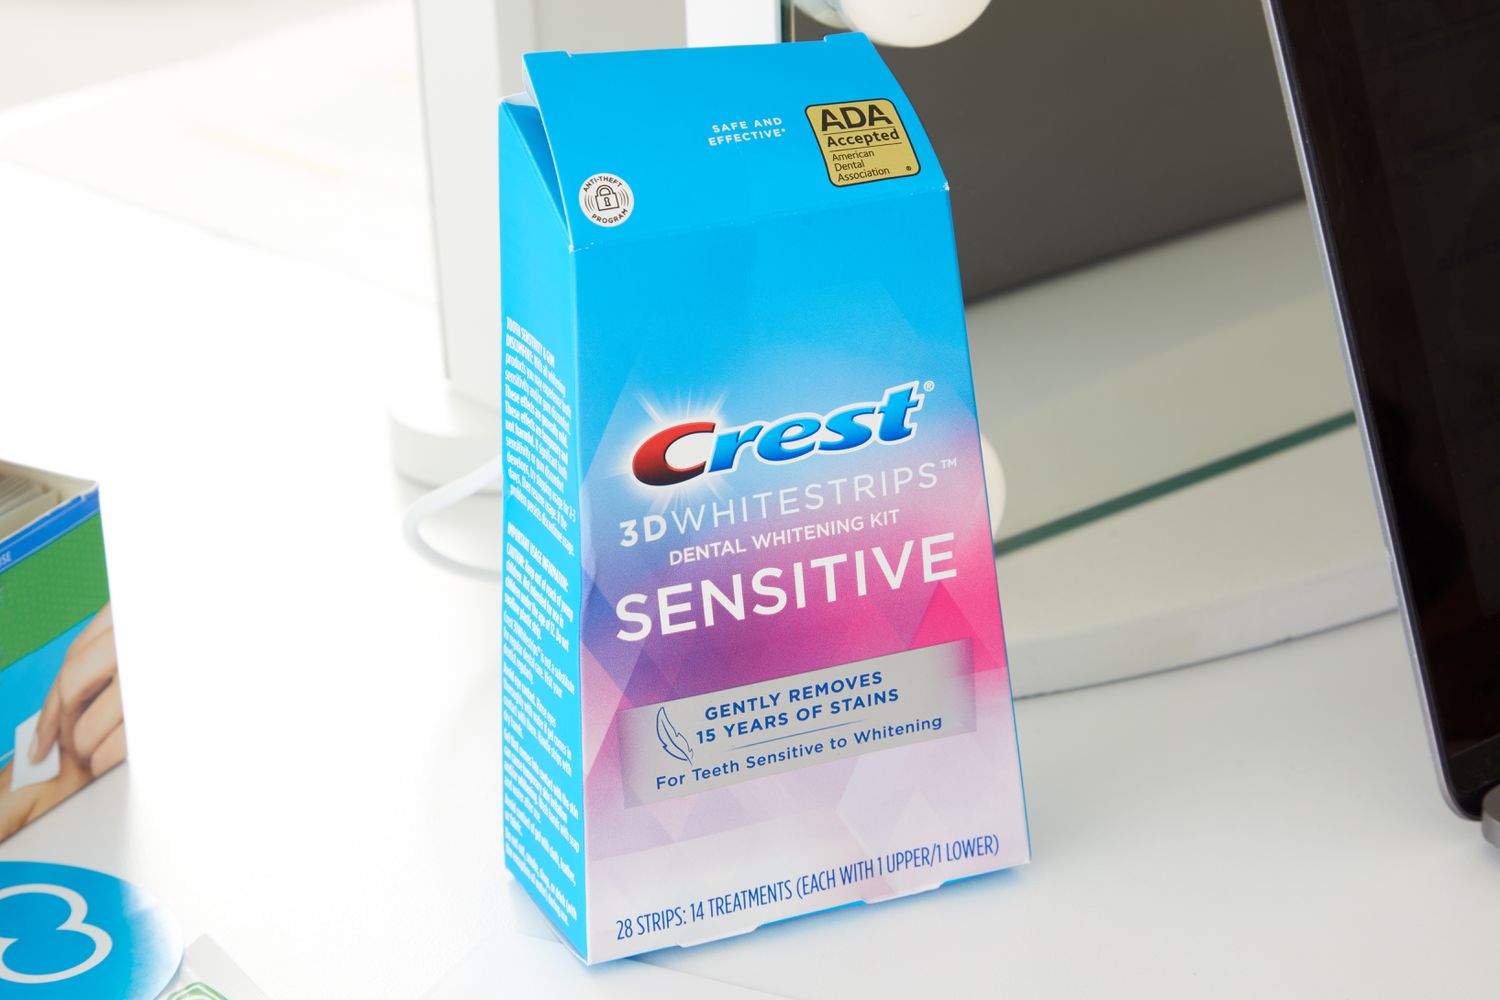 Crest 3D Whitestrips Sensitive Teeth Whitening Kit placed on table